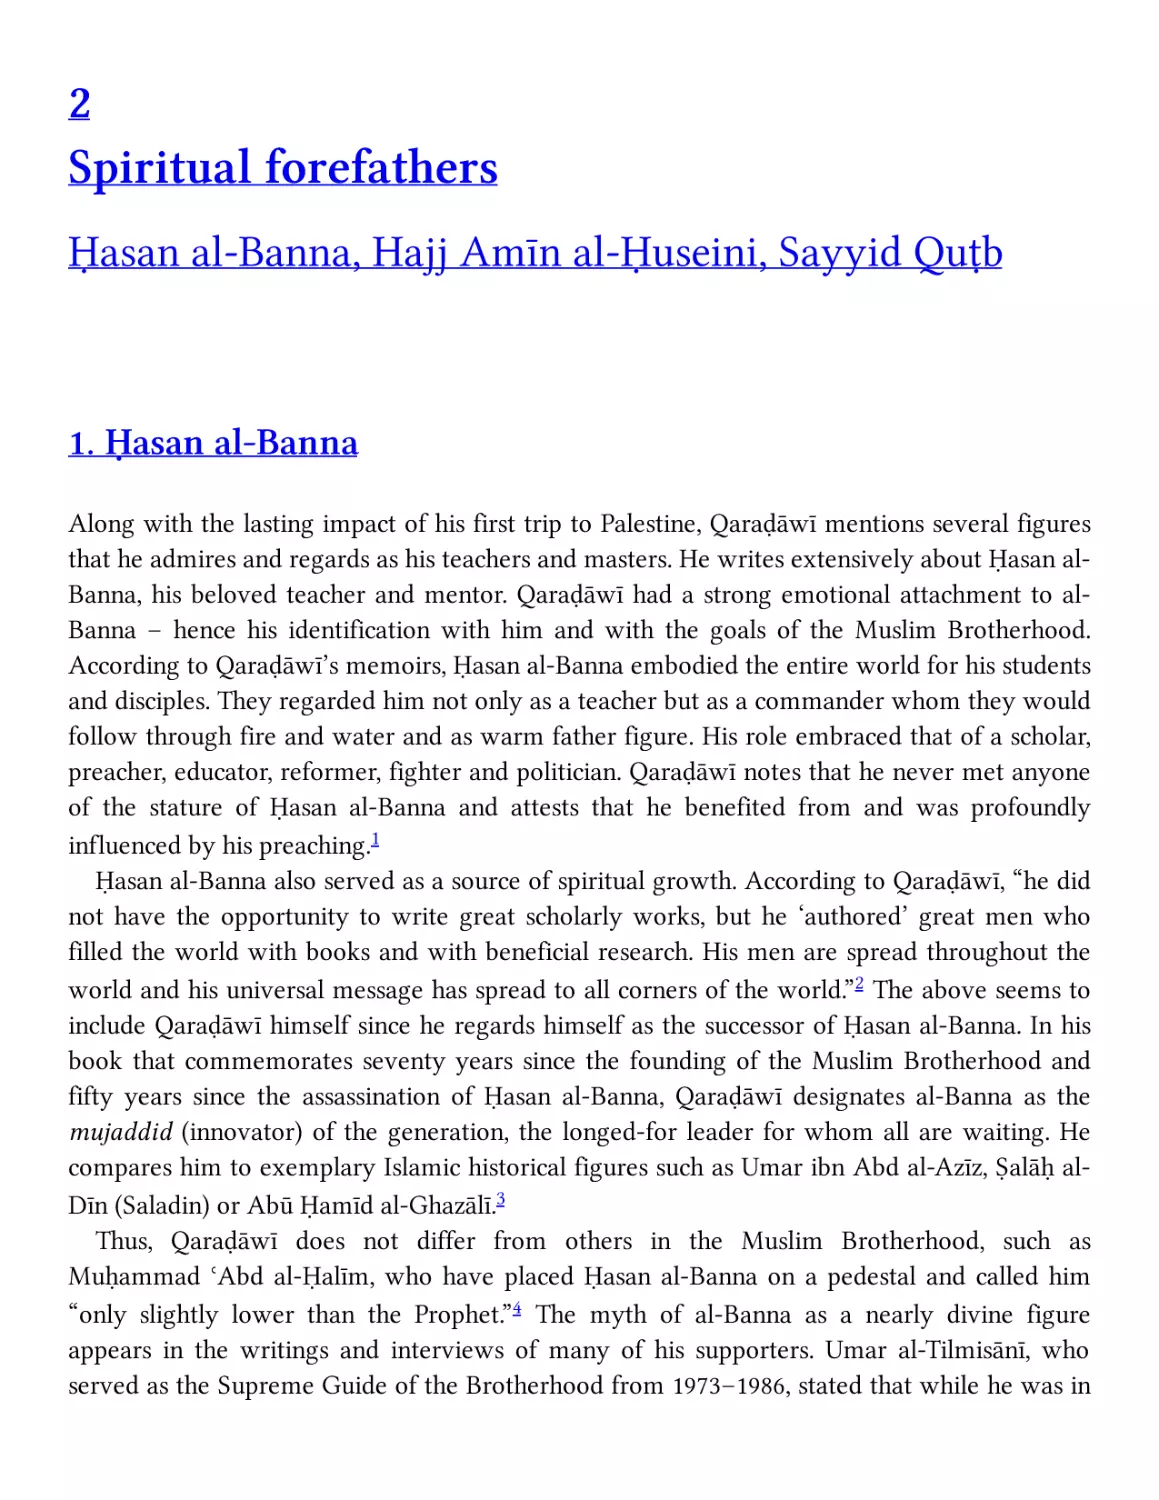 2 Spiritual forefathers
1. Ḥasan al-Banna